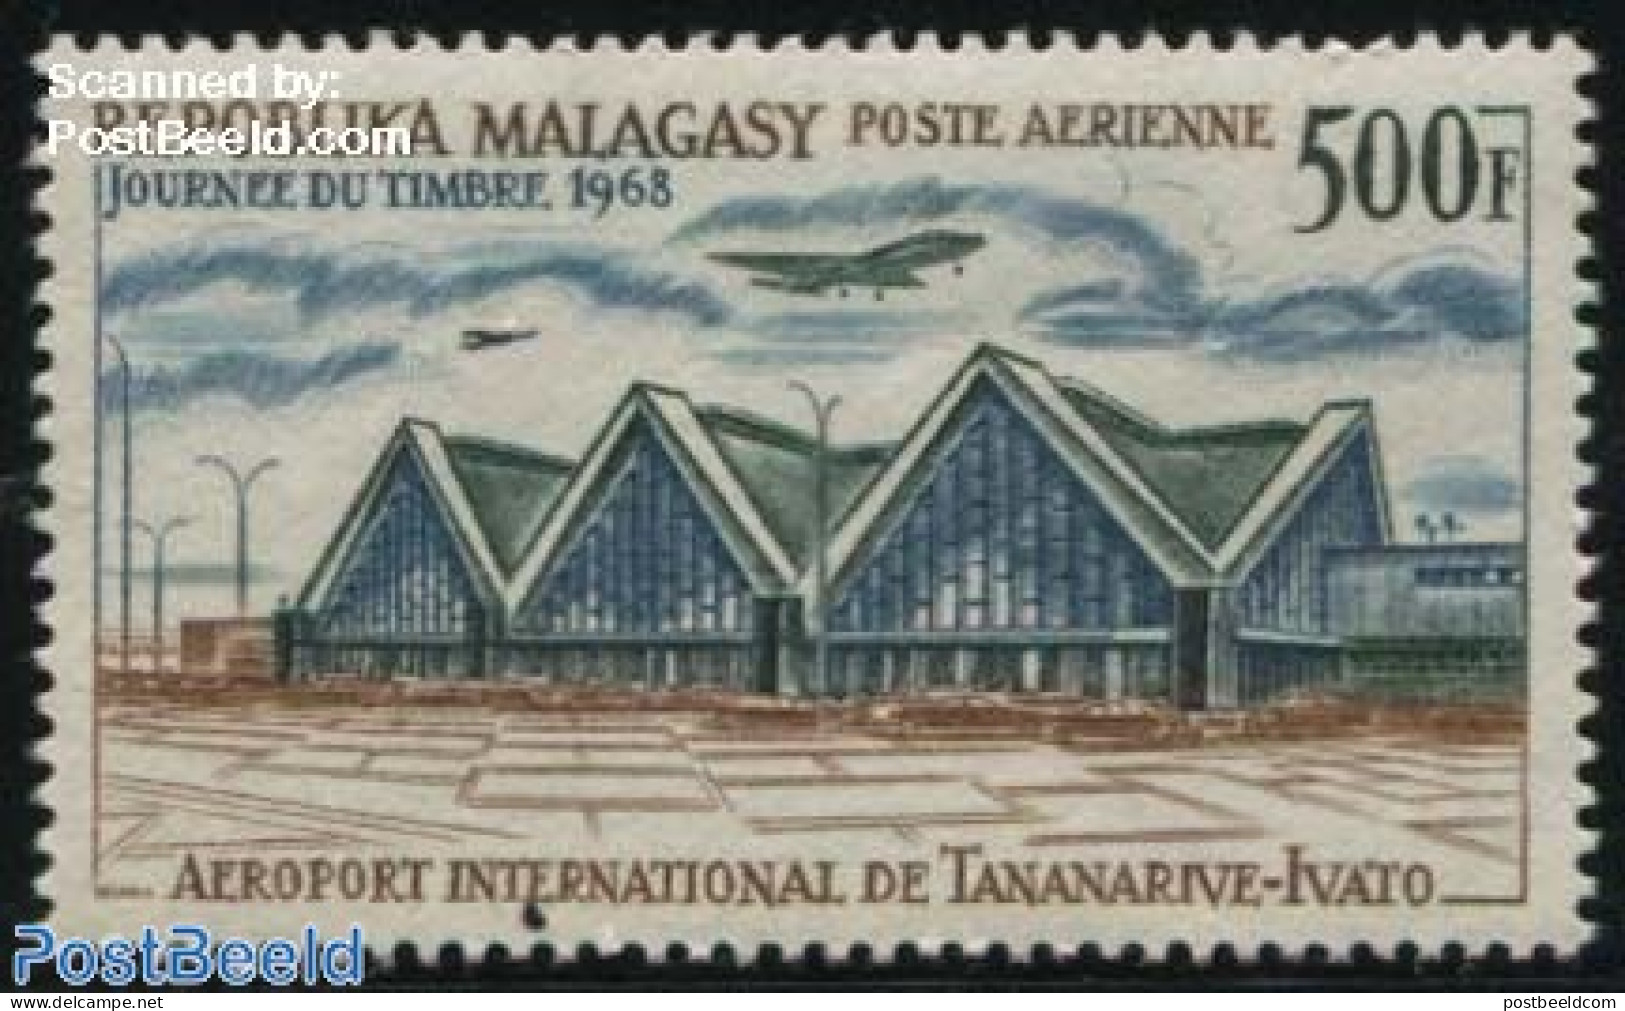 Madagascar 1968 Stamp Day 1v, Mint NH, Transport - Stamp Day - Aircraft & Aviation - Art - Modern Architecture - Dag Van De Postzegel